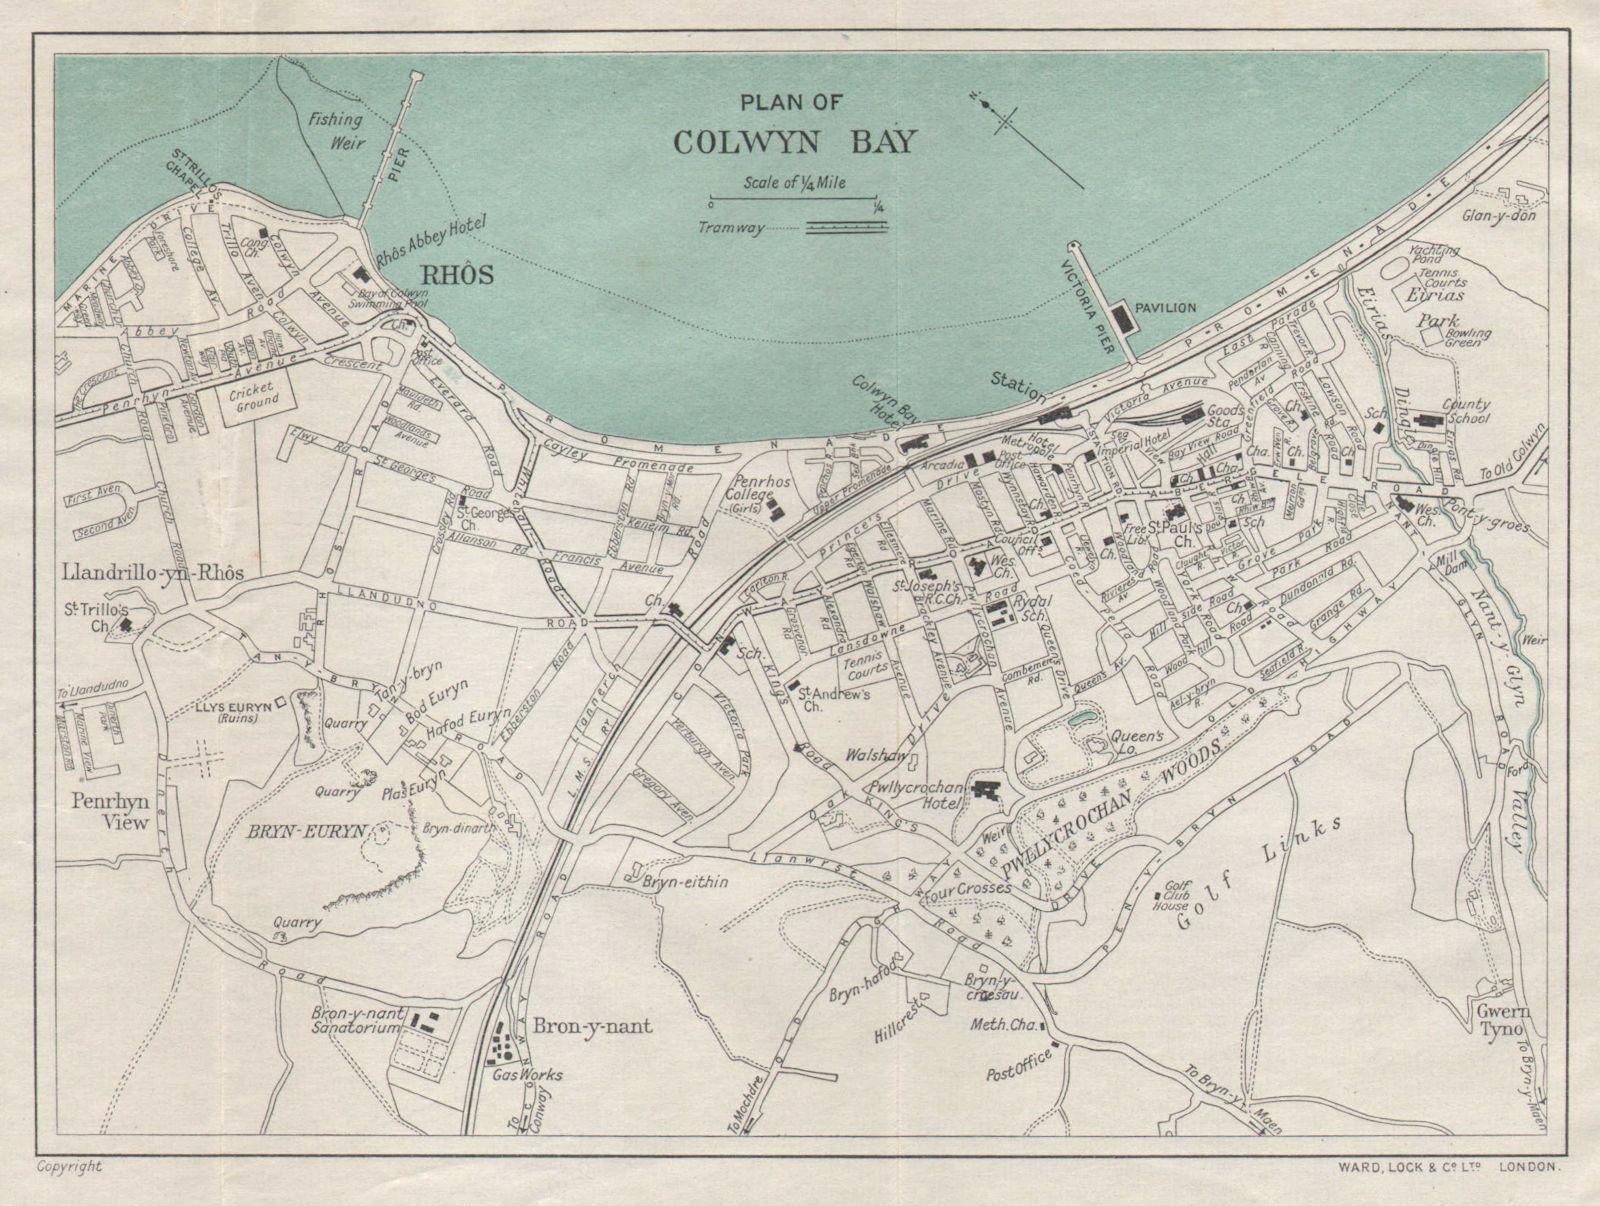 Associate Product COLWYN BAY vintage tourist town city resort plan. Wales. WARD LOCK 1938 map